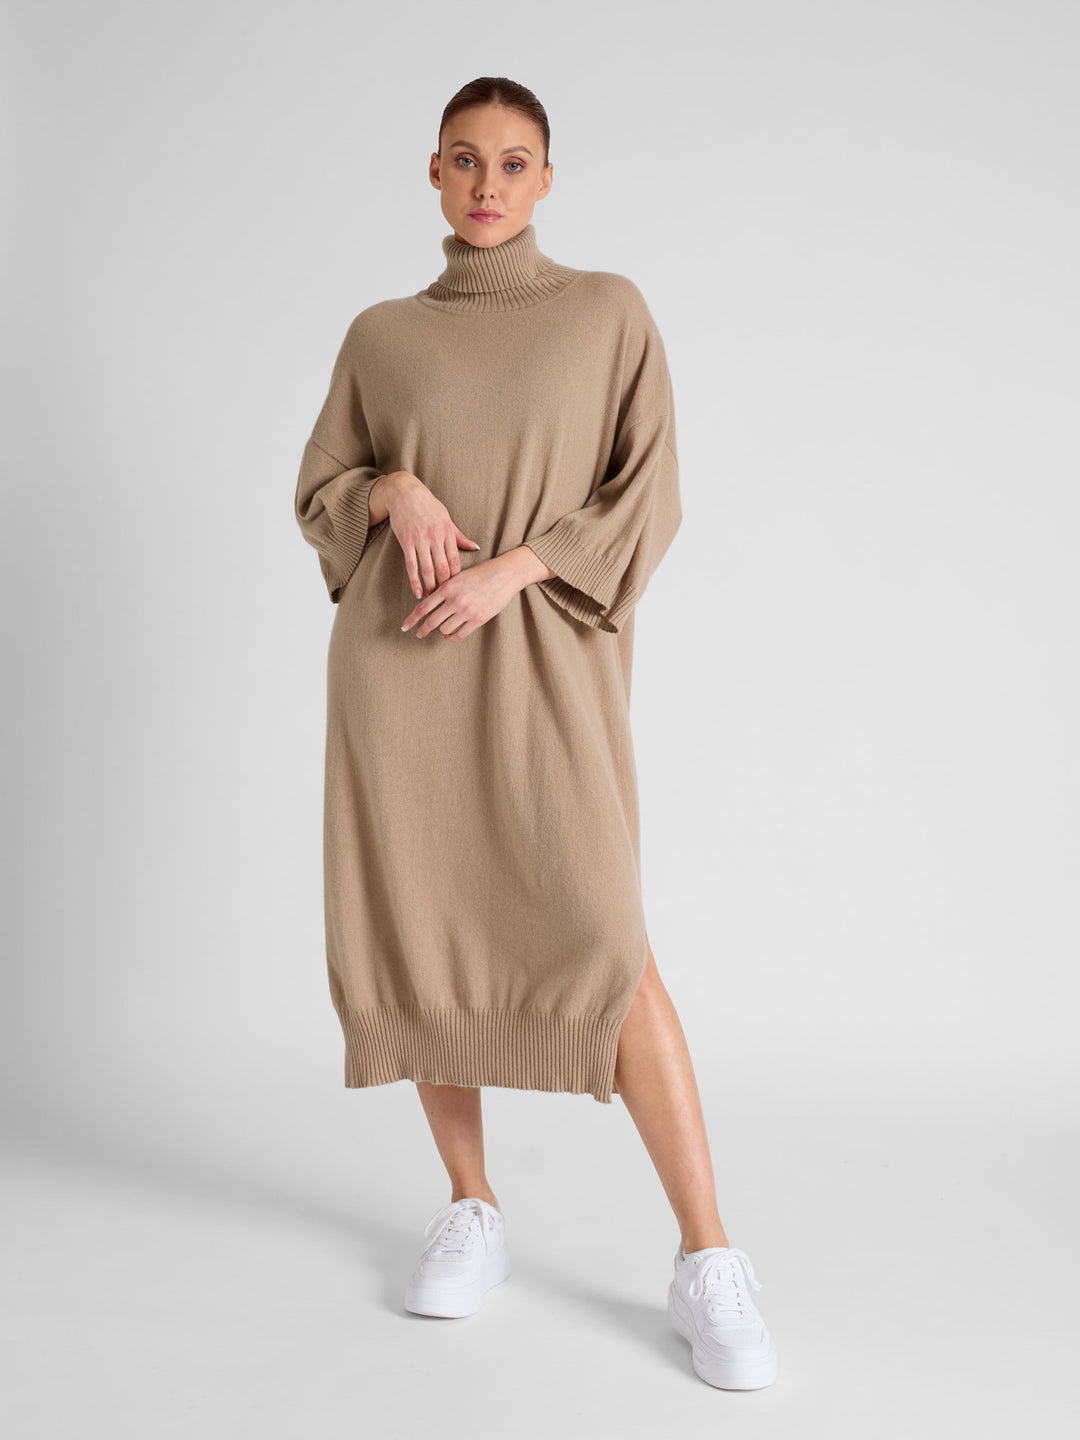 Cashmere dress "Breeze" in 100% pure cashmere. Scandinavian design by Kashmina. Color: Sand.